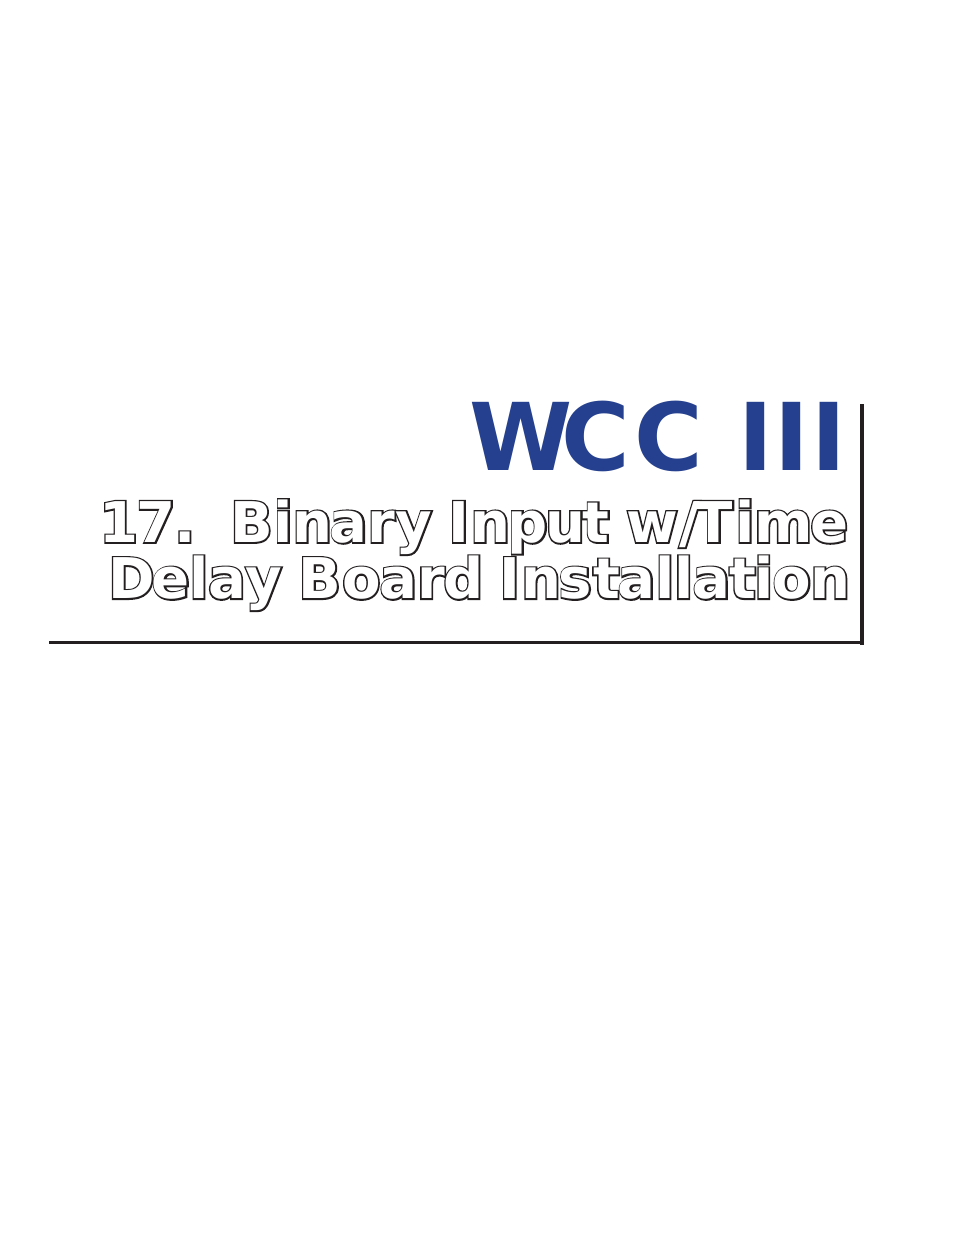 WCC III part 18